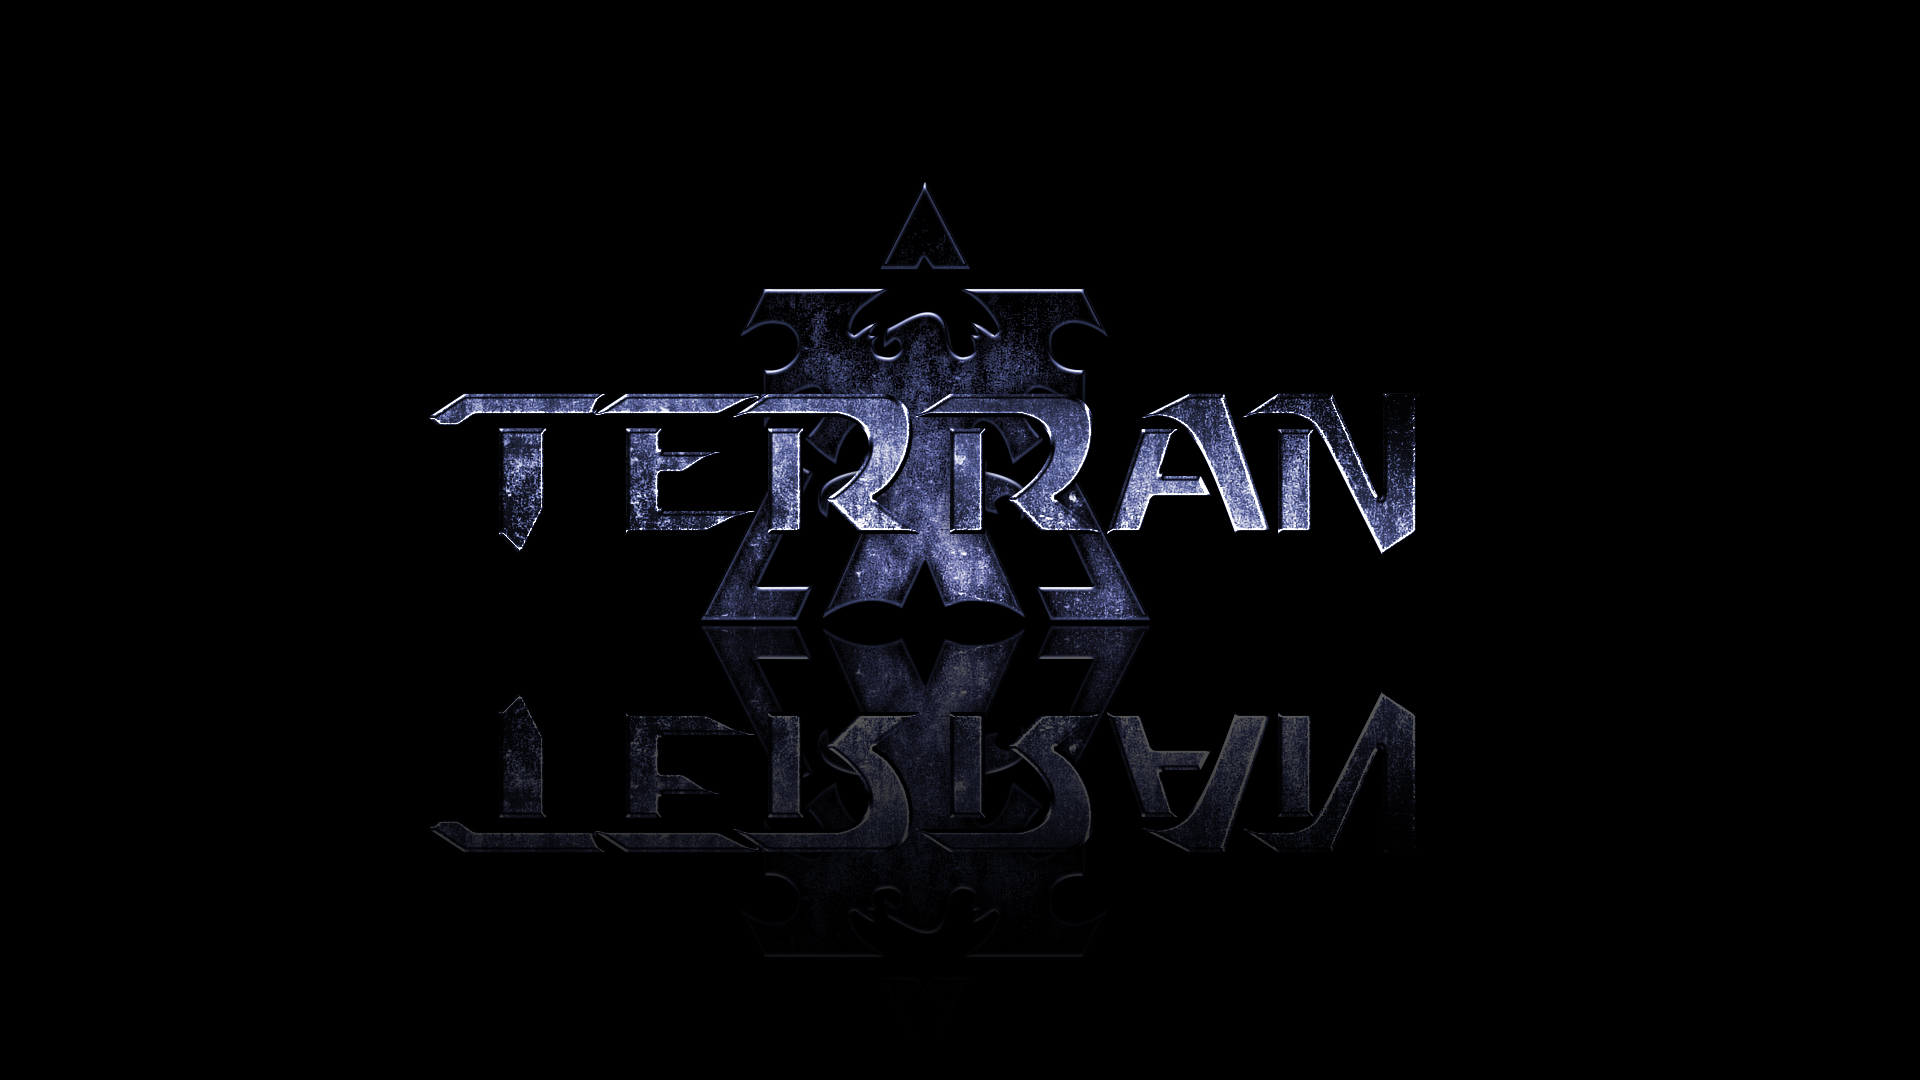 Starcraft Terran Wallpaper By Tramauhh